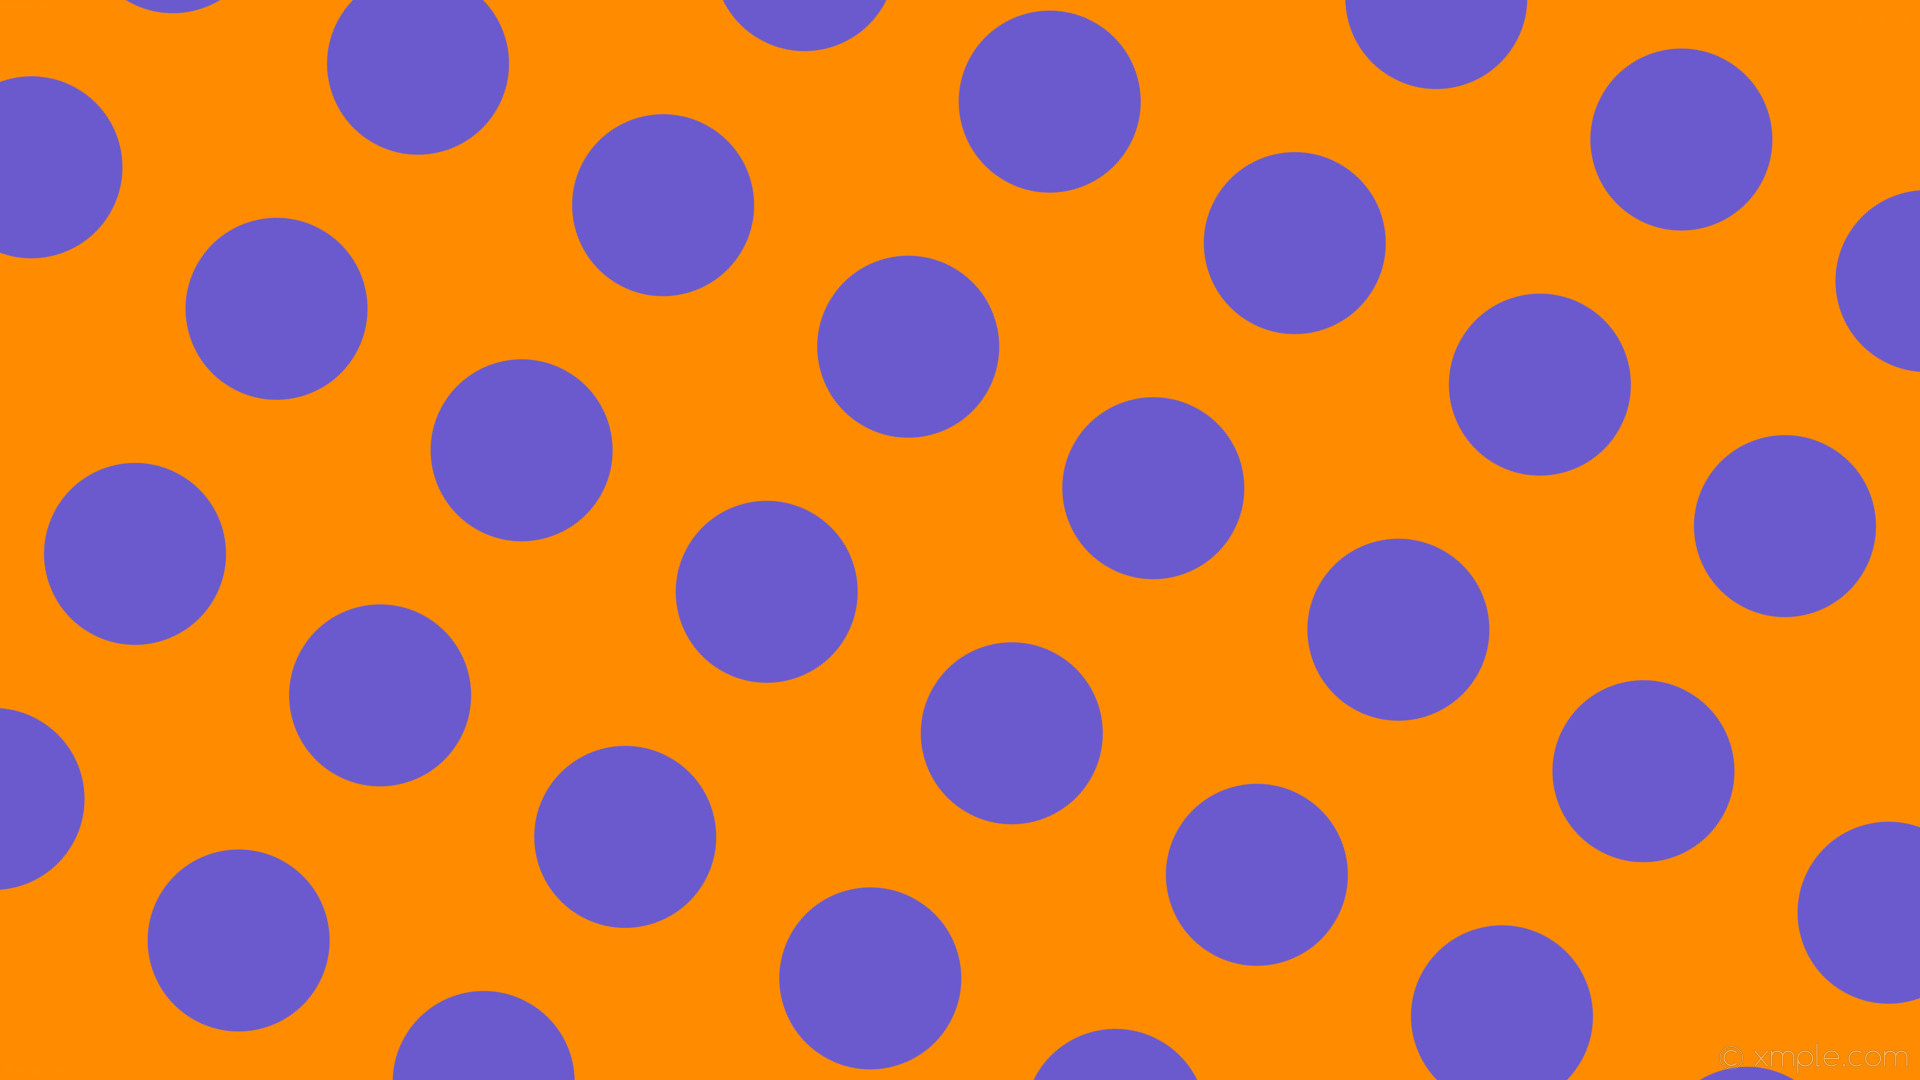 1920x1080 wallpaper purple dots spots orange polka dark orange slate blue #ff8c00  #6a5acd 330Â°